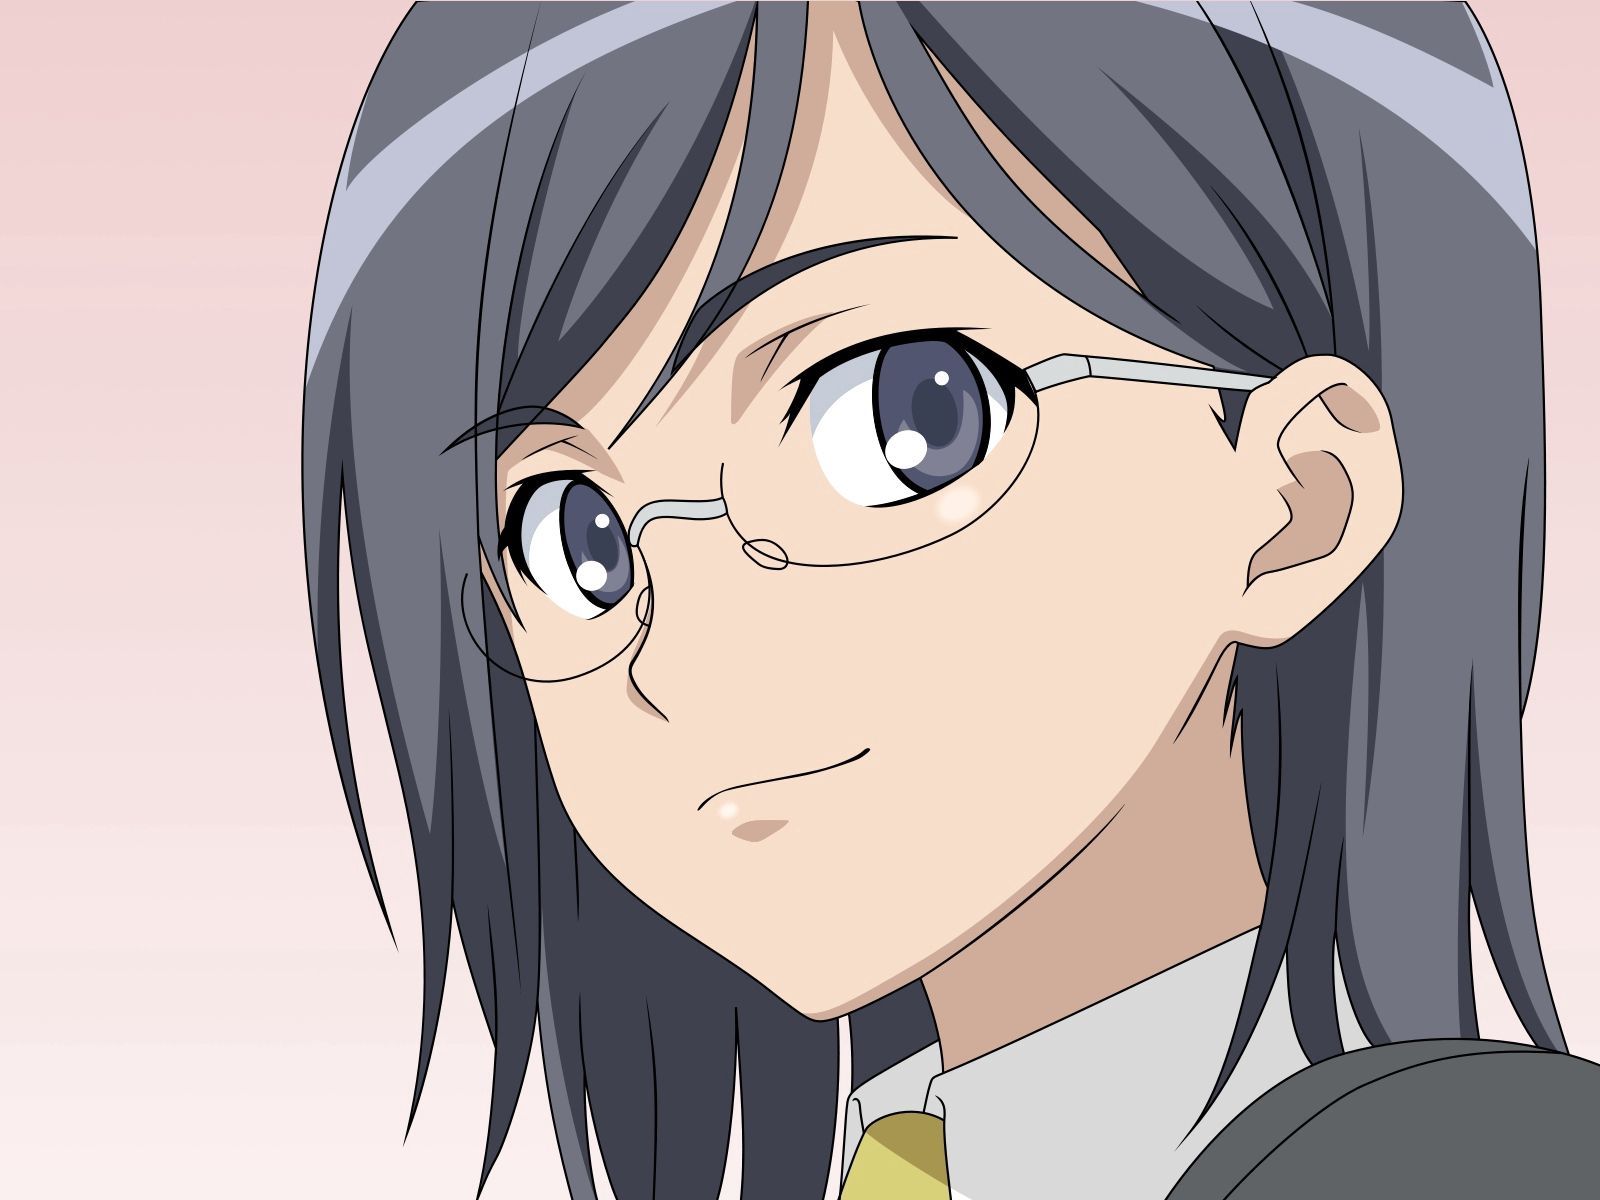 Anime Girl With Glasses And Short Hair - anime girl